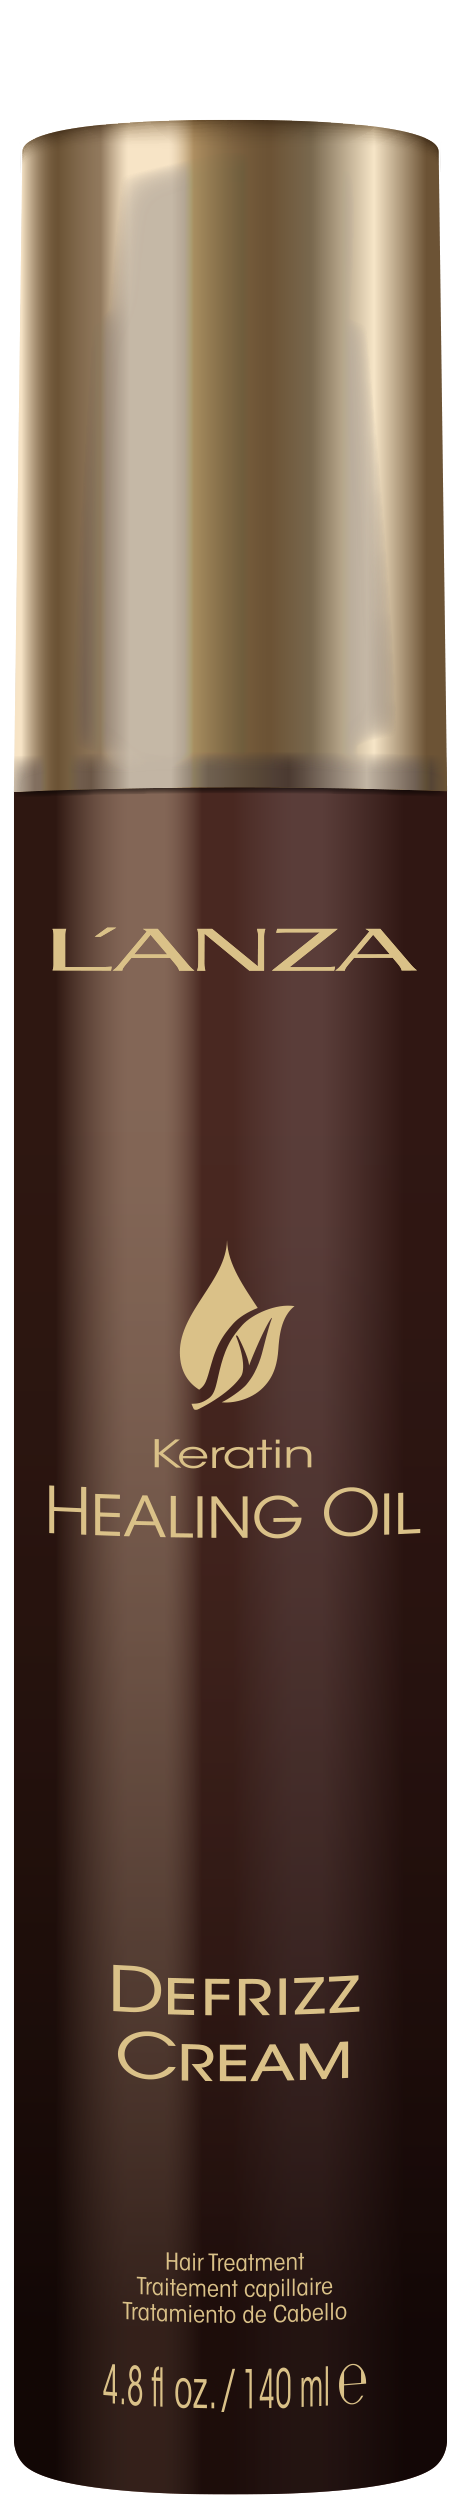 L'ANZA  Keratin Healing Oil Defrizz Cream